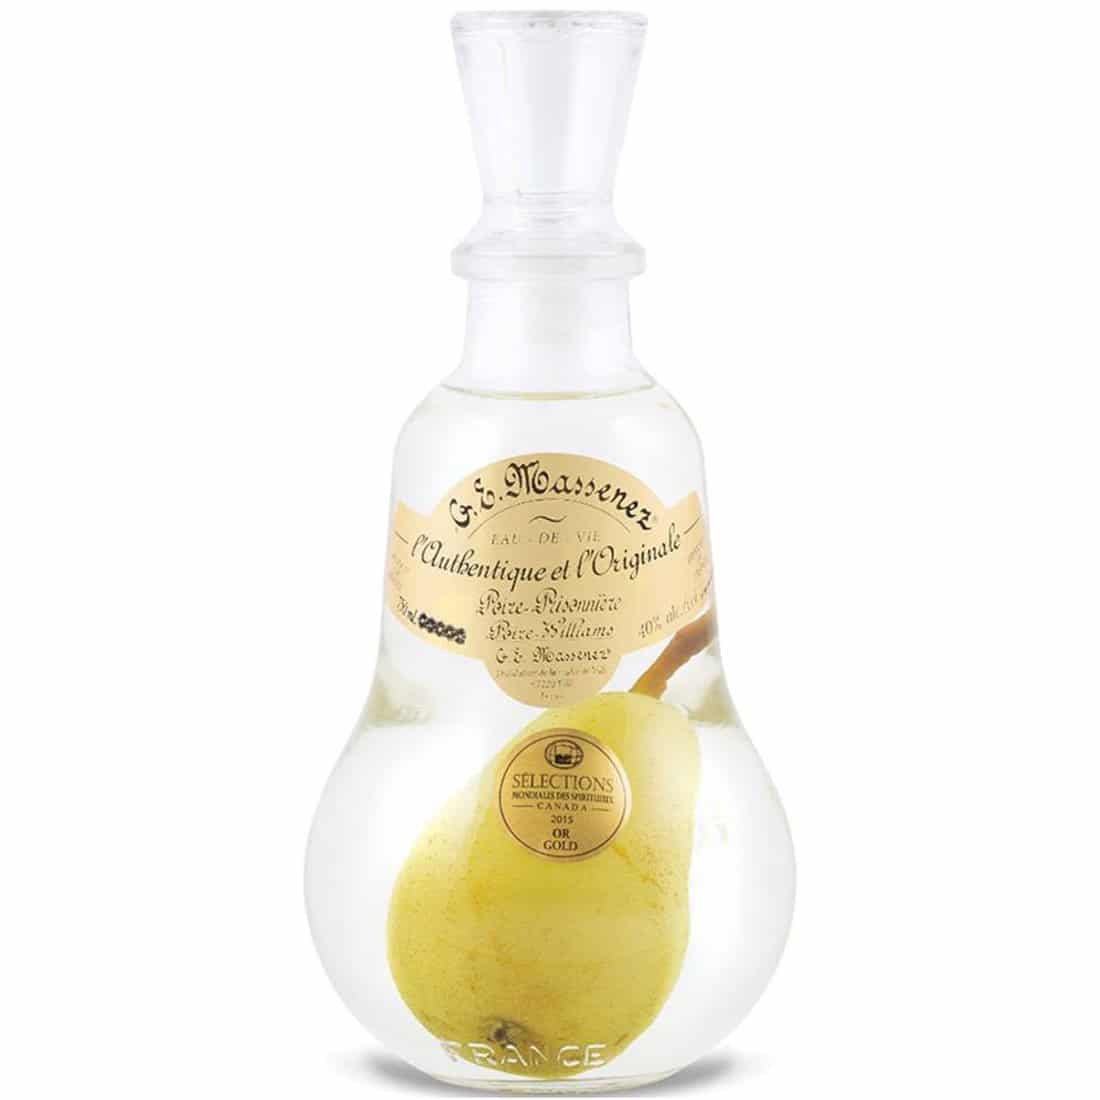 Clear bottle of Massenez Poire Williams pear brandy with pear in the bottle